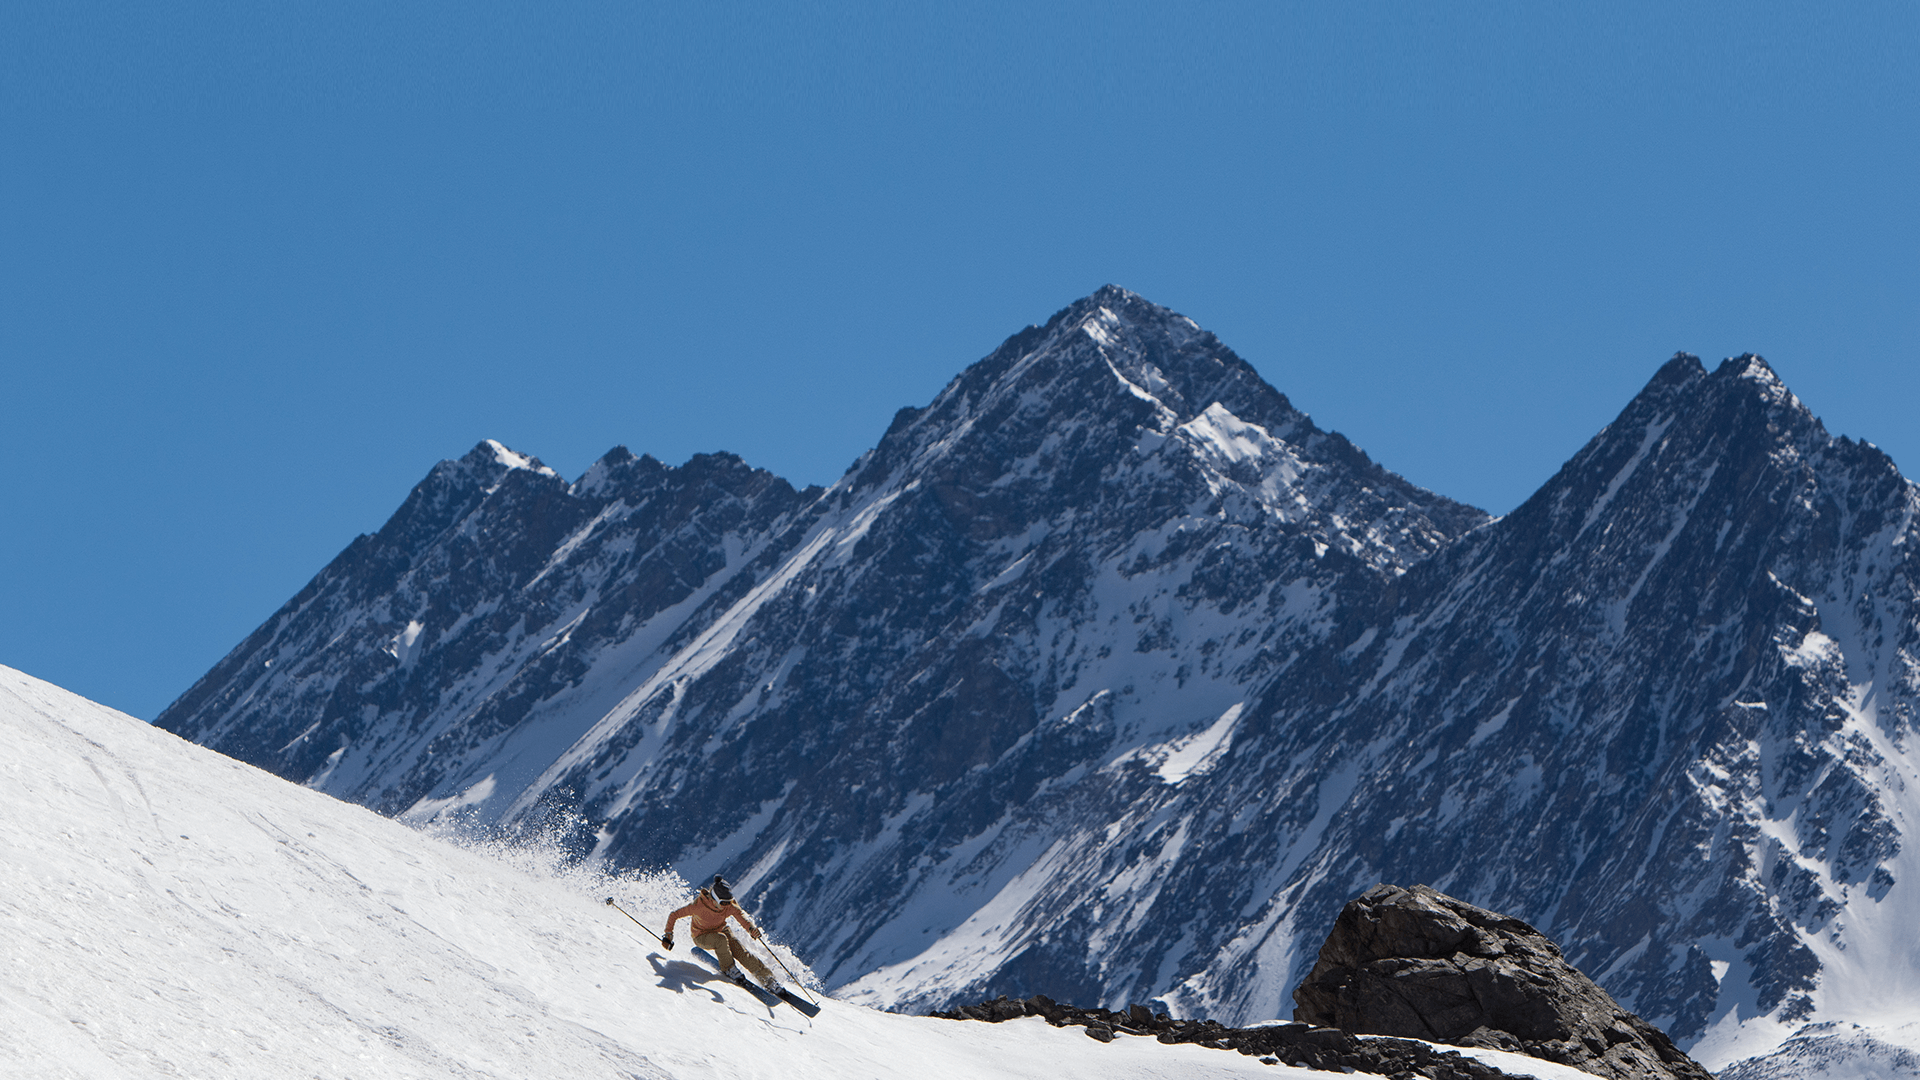 Ski in the Andes